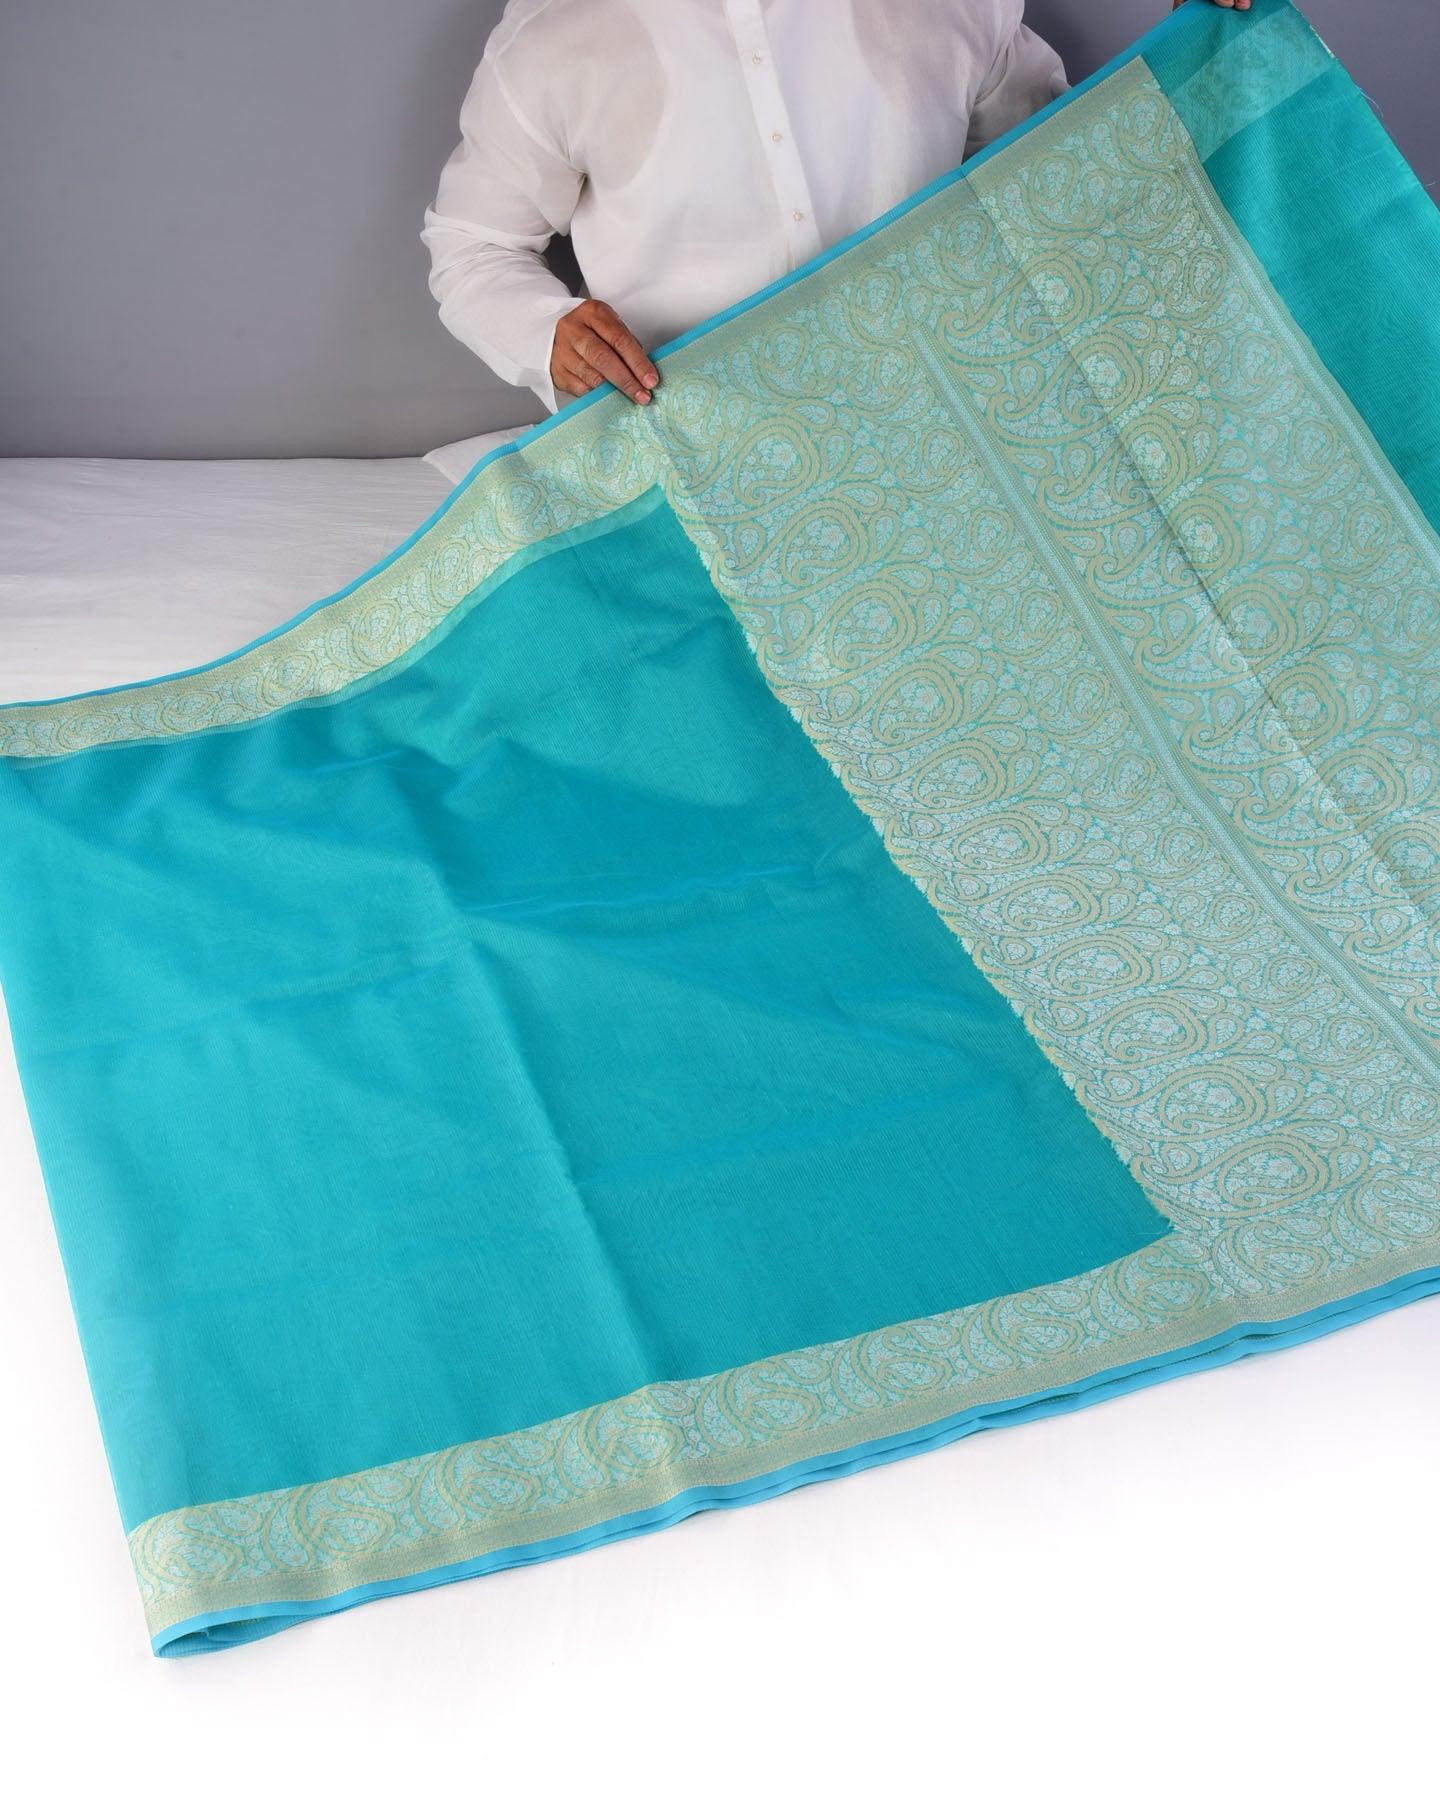 Blue Green Banarasi Cutwork Brocade Woven Art Cotton Silk Saree with Resham Kairi Border Pallu - By HolyWeaves, Benares